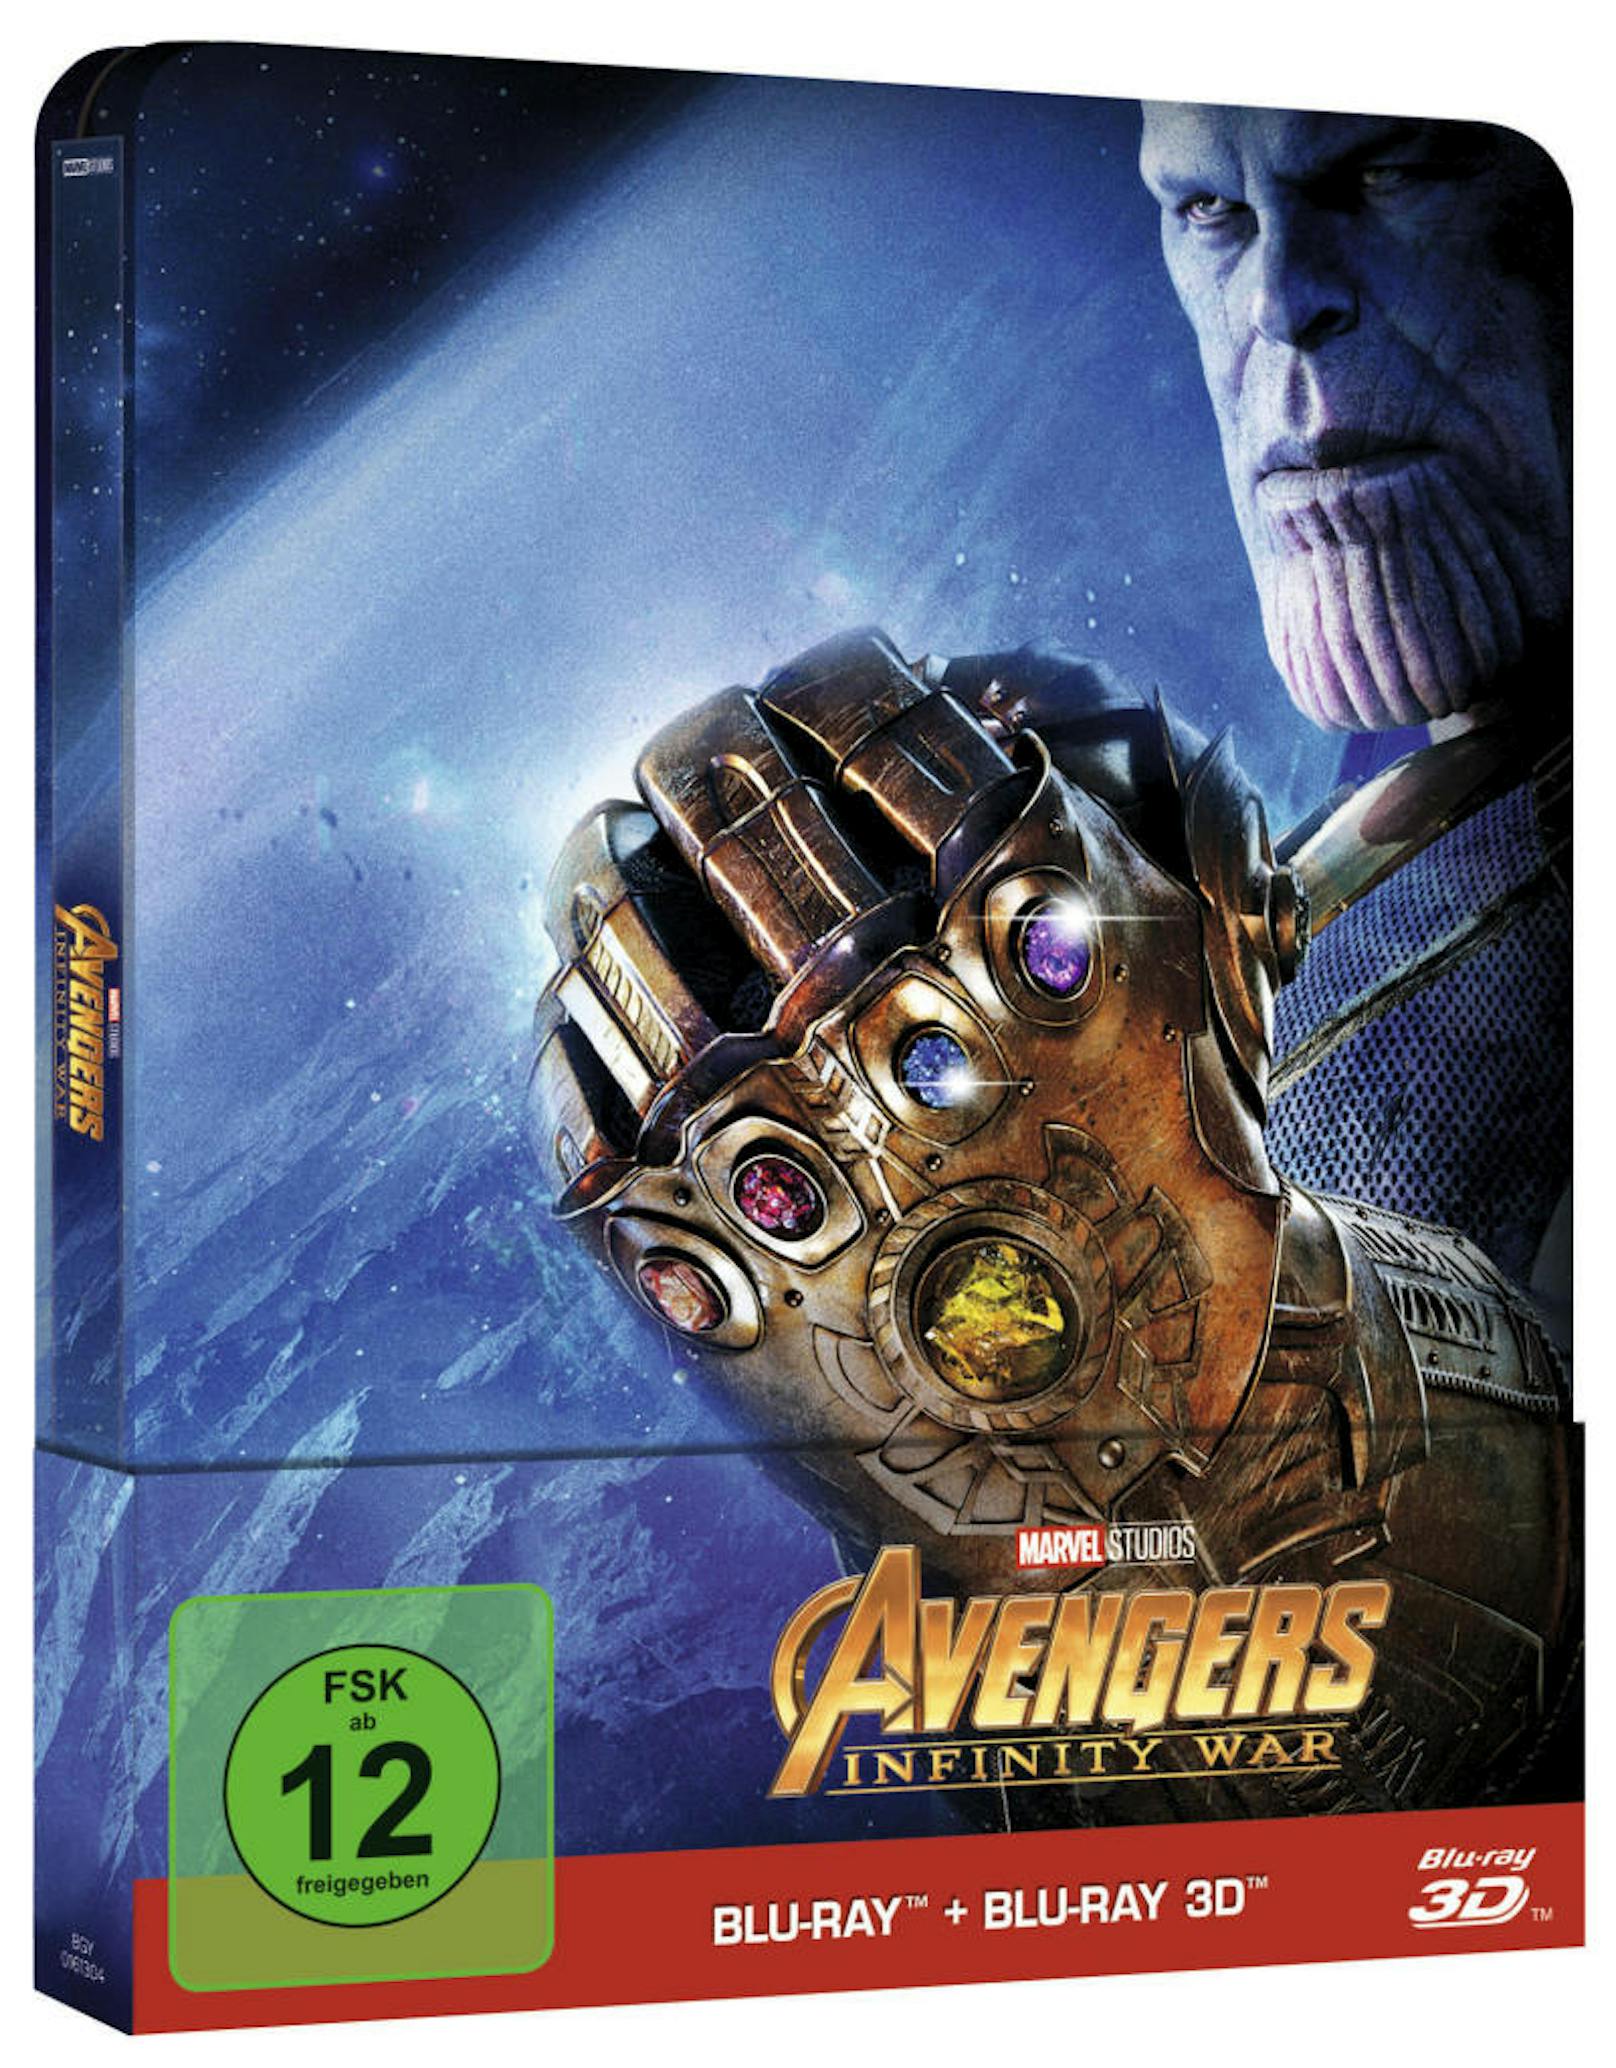 Steelbook von "Avengers: Infinity War"